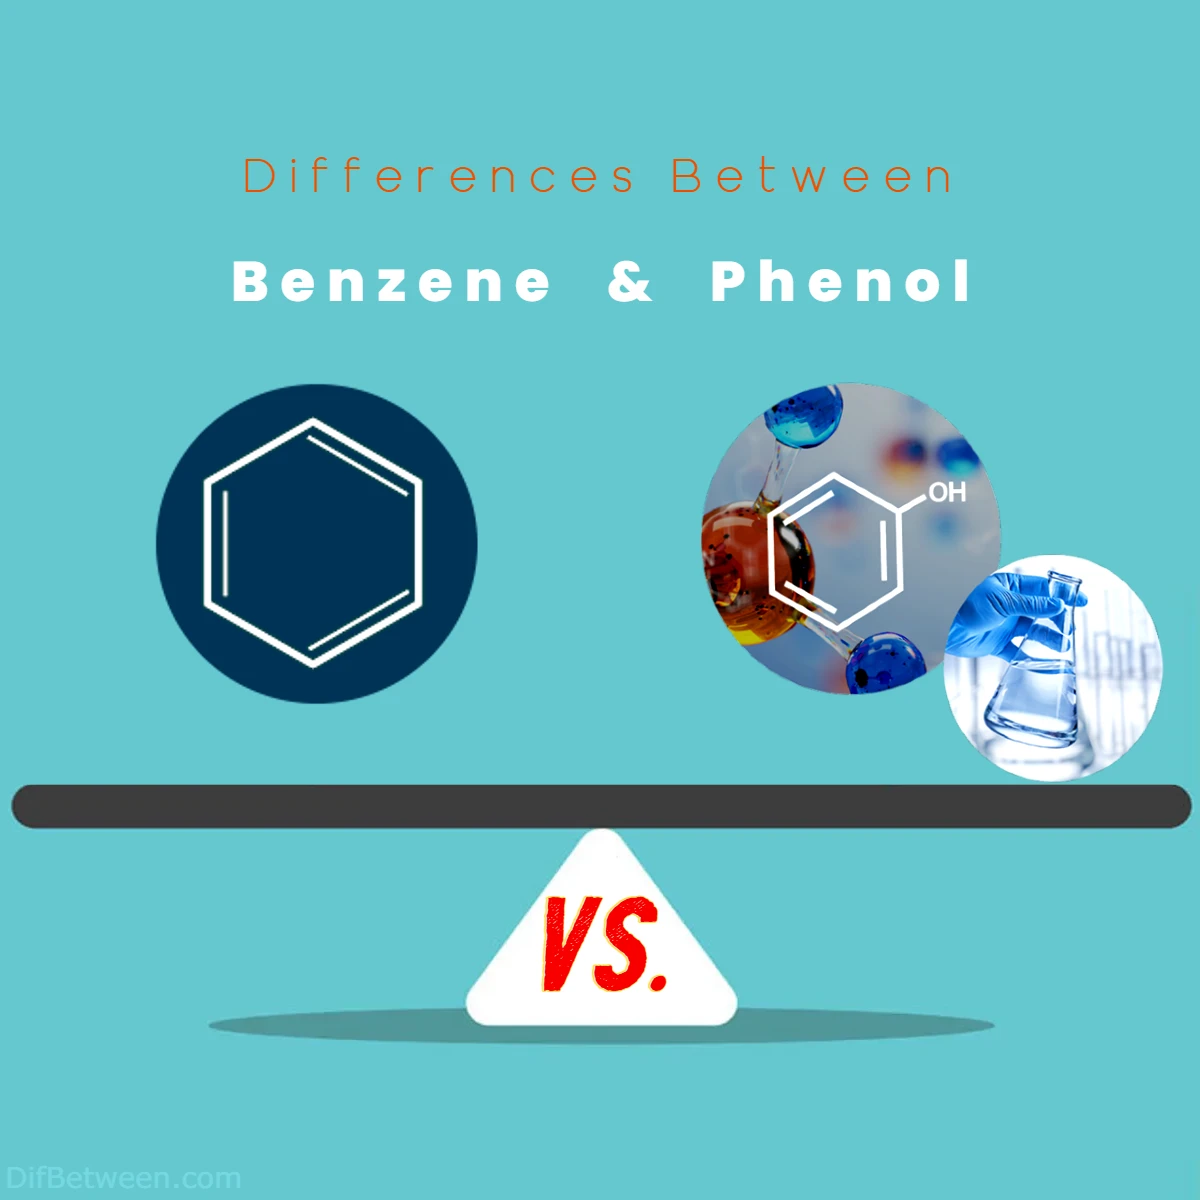 Differences Between Benzene vs Phenol